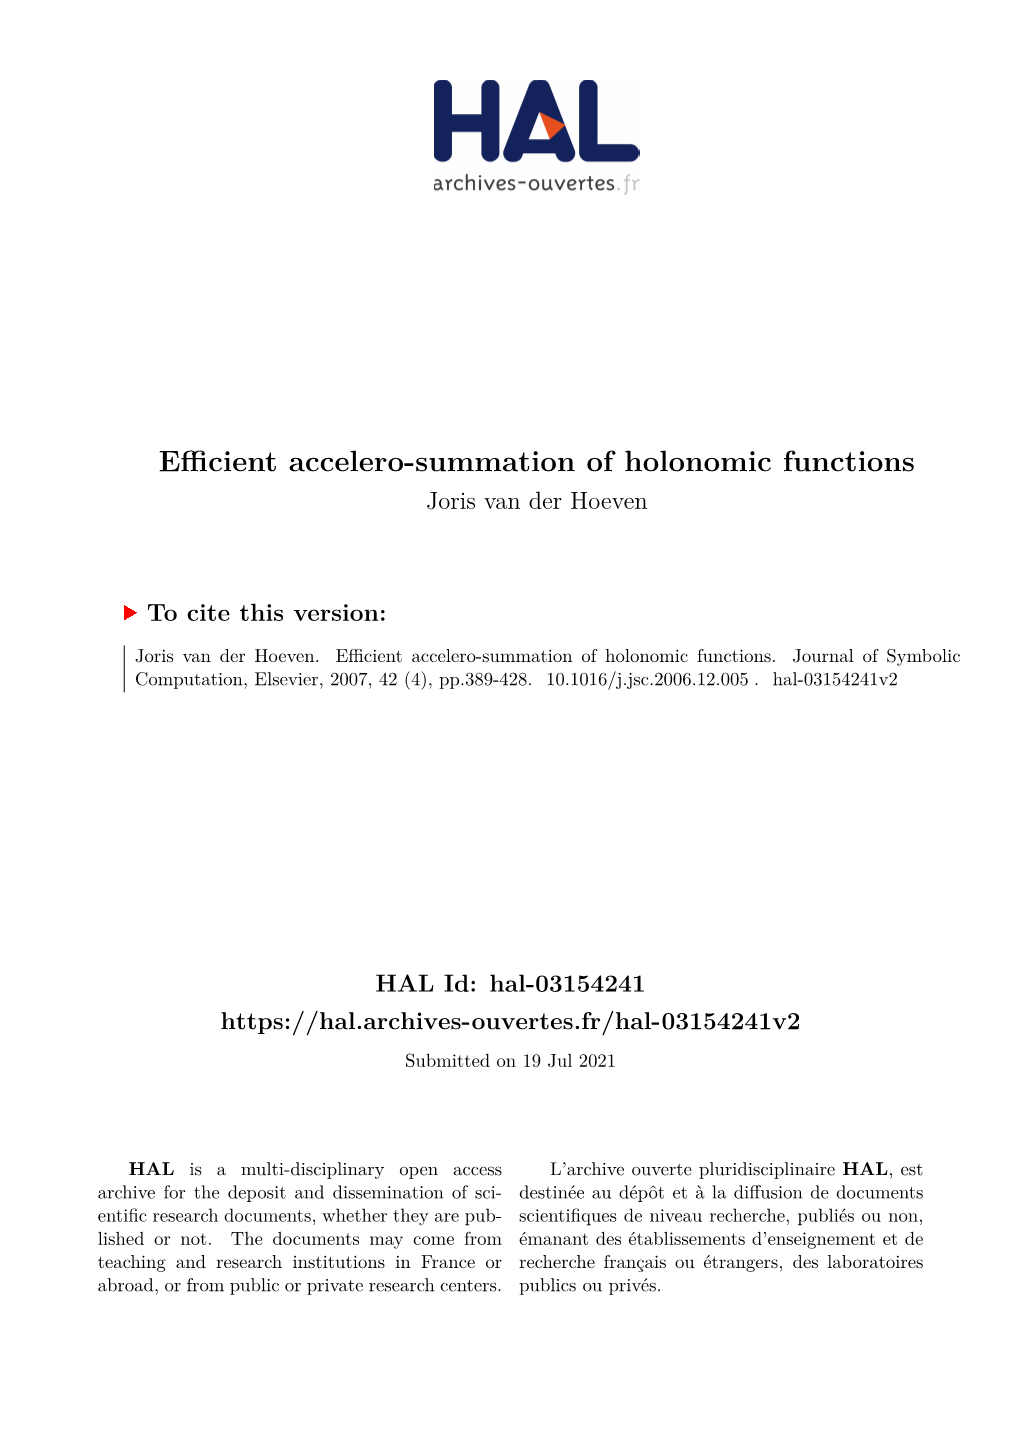 Efficient Accelero-Summation of Holonomic Functions